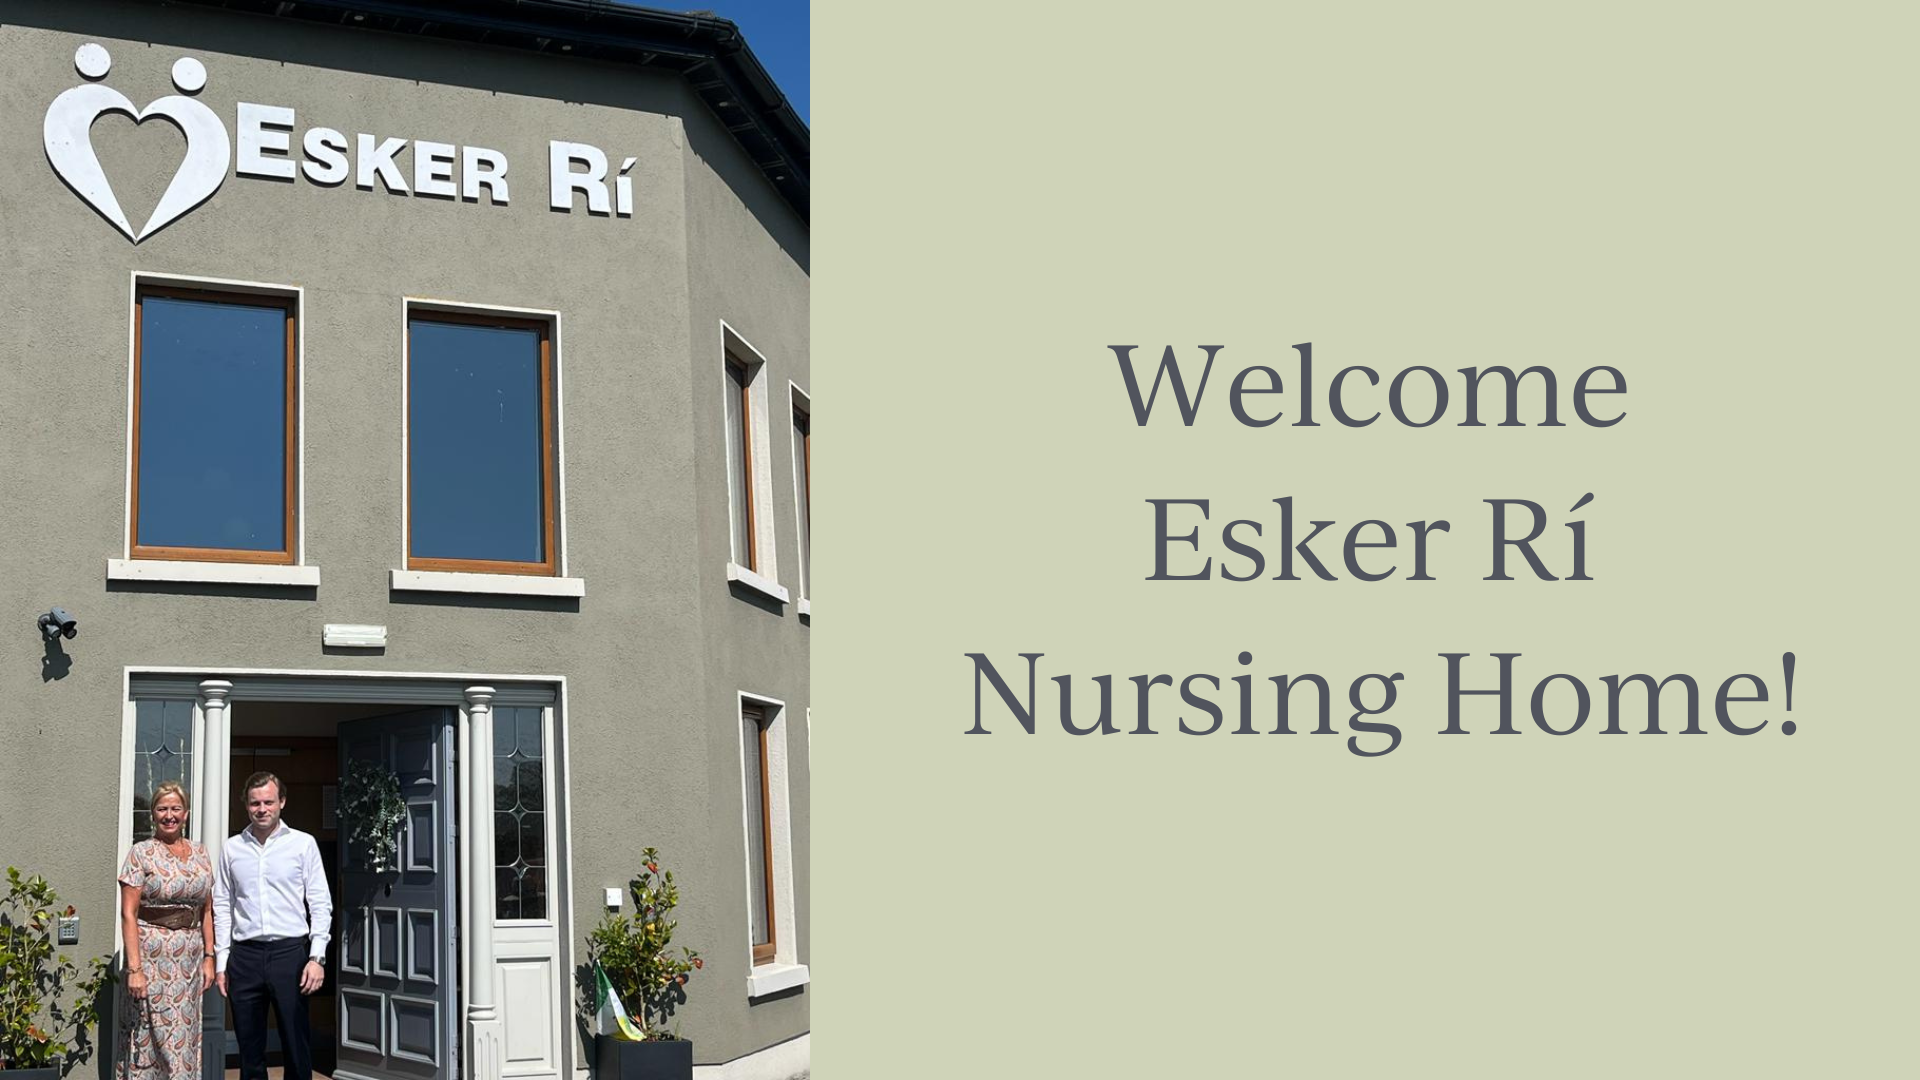 Image of Esker Rí Nursing Home exterior with Eamonn Prone and Rosetta Herr outside it